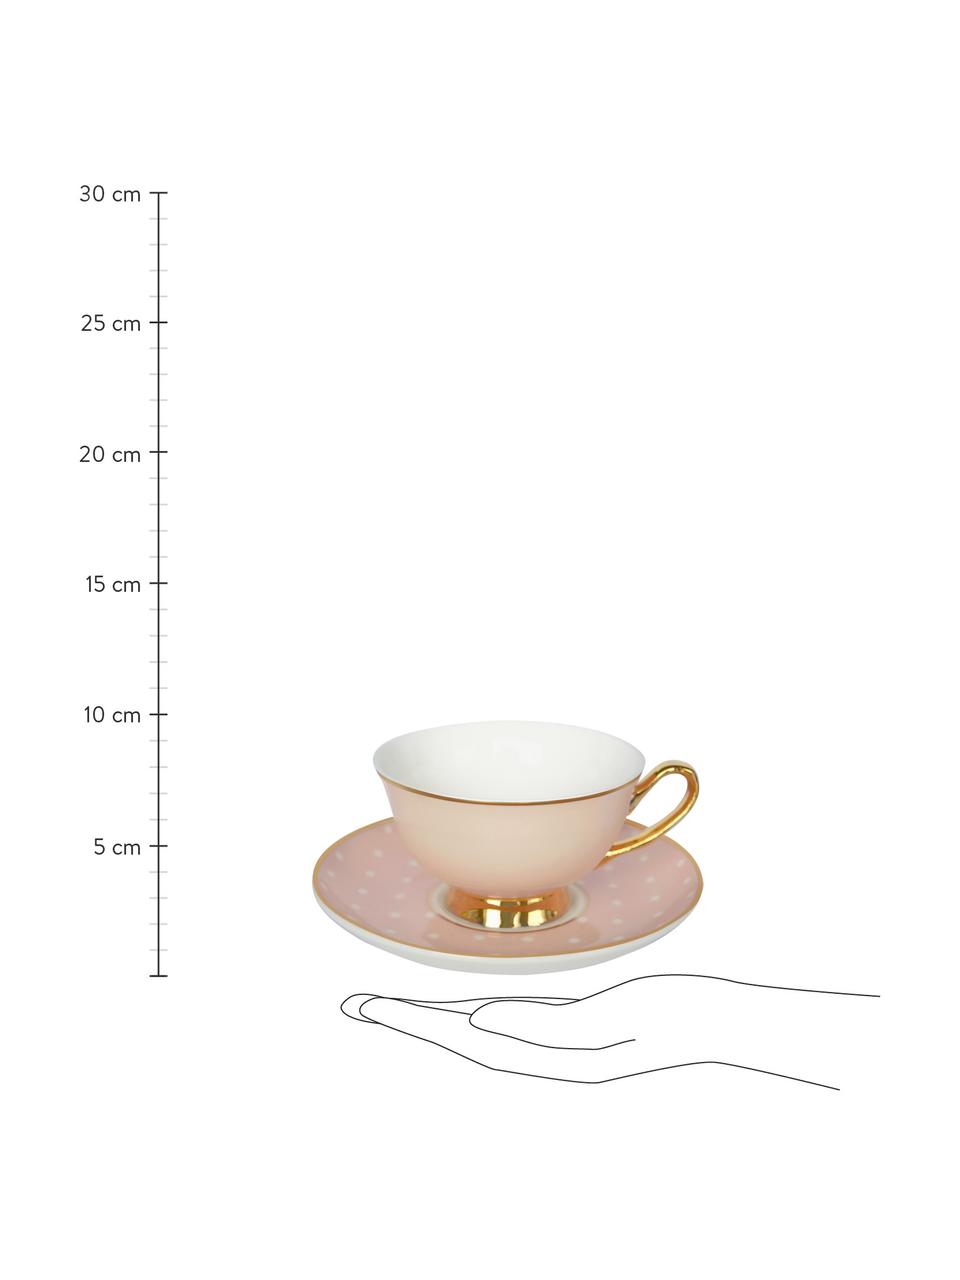 Taza de té con platito Spotty, Porcelana fina, dorada, Rosa, blanco Borde y asa: oro, Ø 15 x Al 6 cm